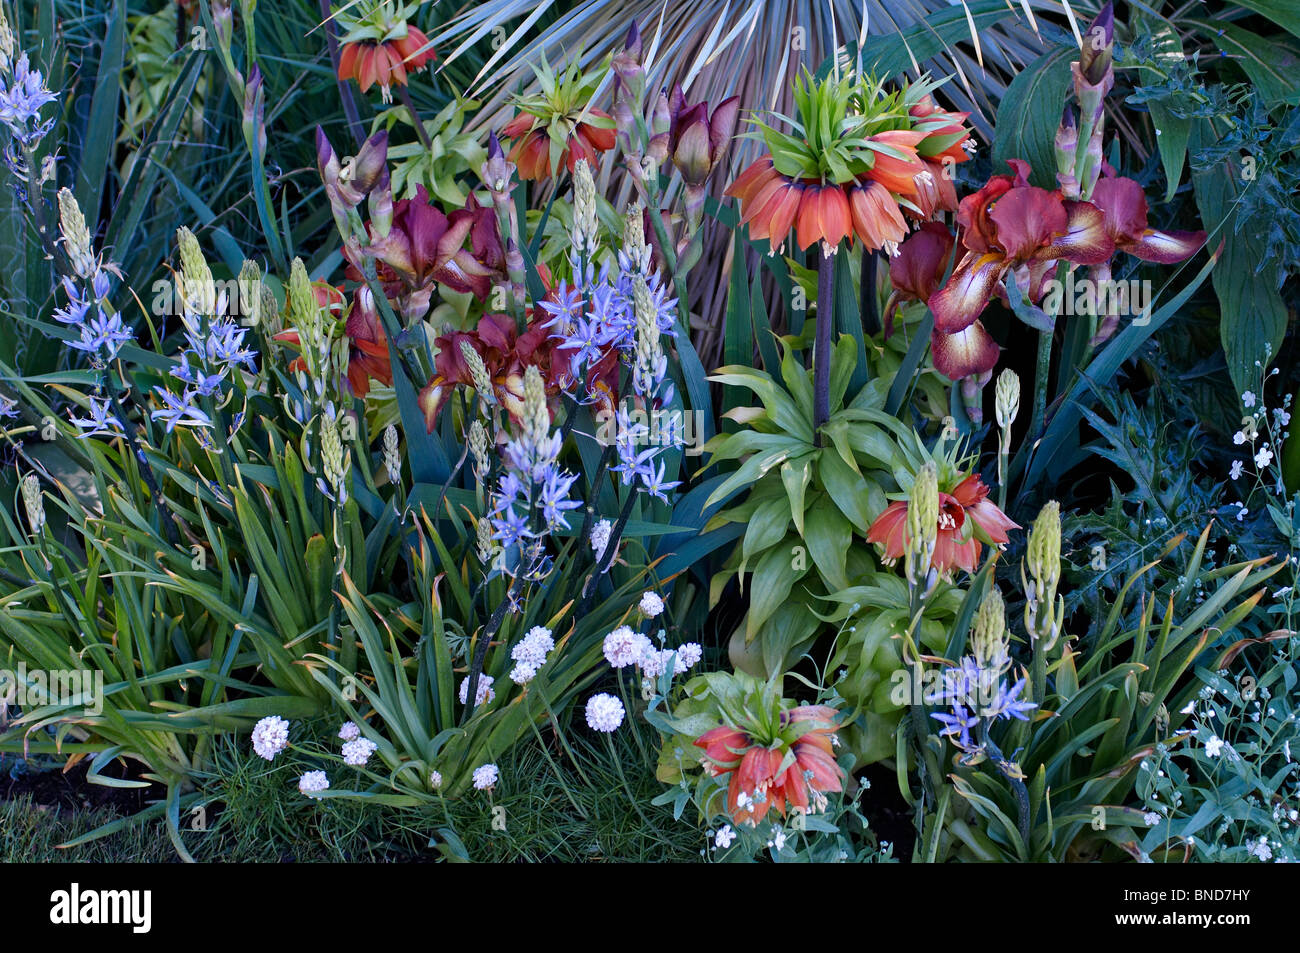 Fritillaria imperialis in a garden border with mixed planting Stock Photo